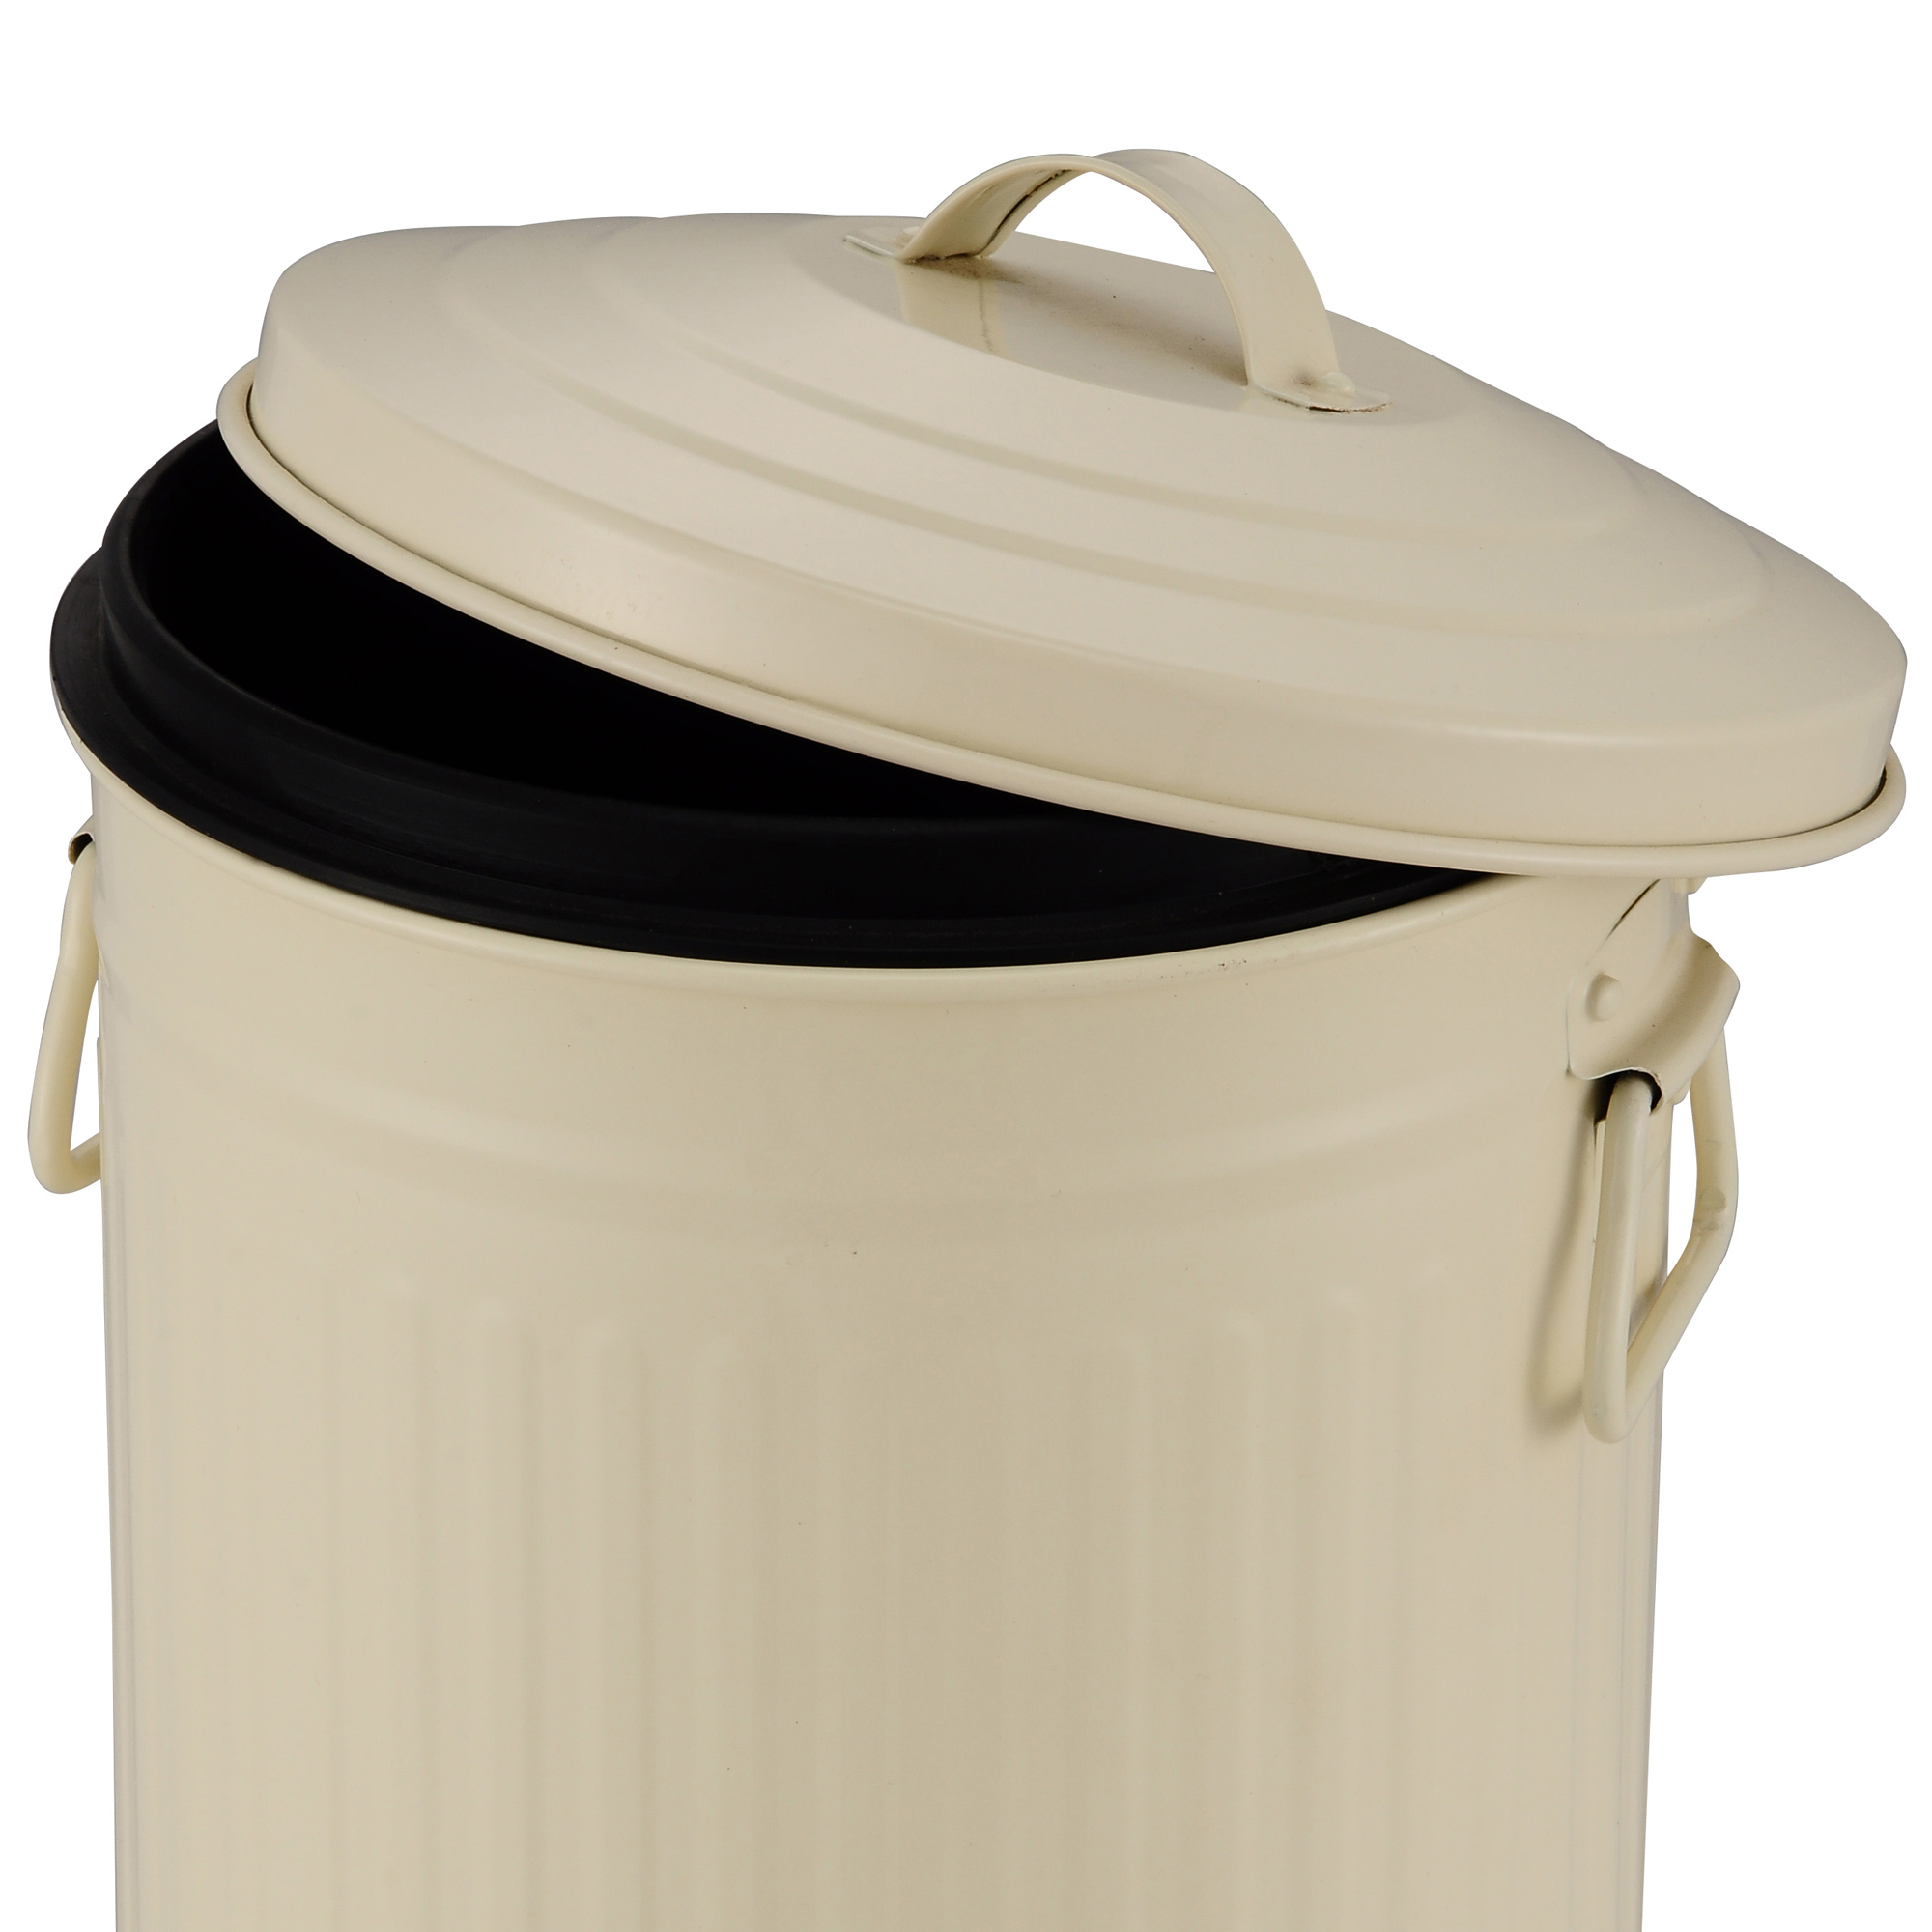 powder finish waste bin with lid